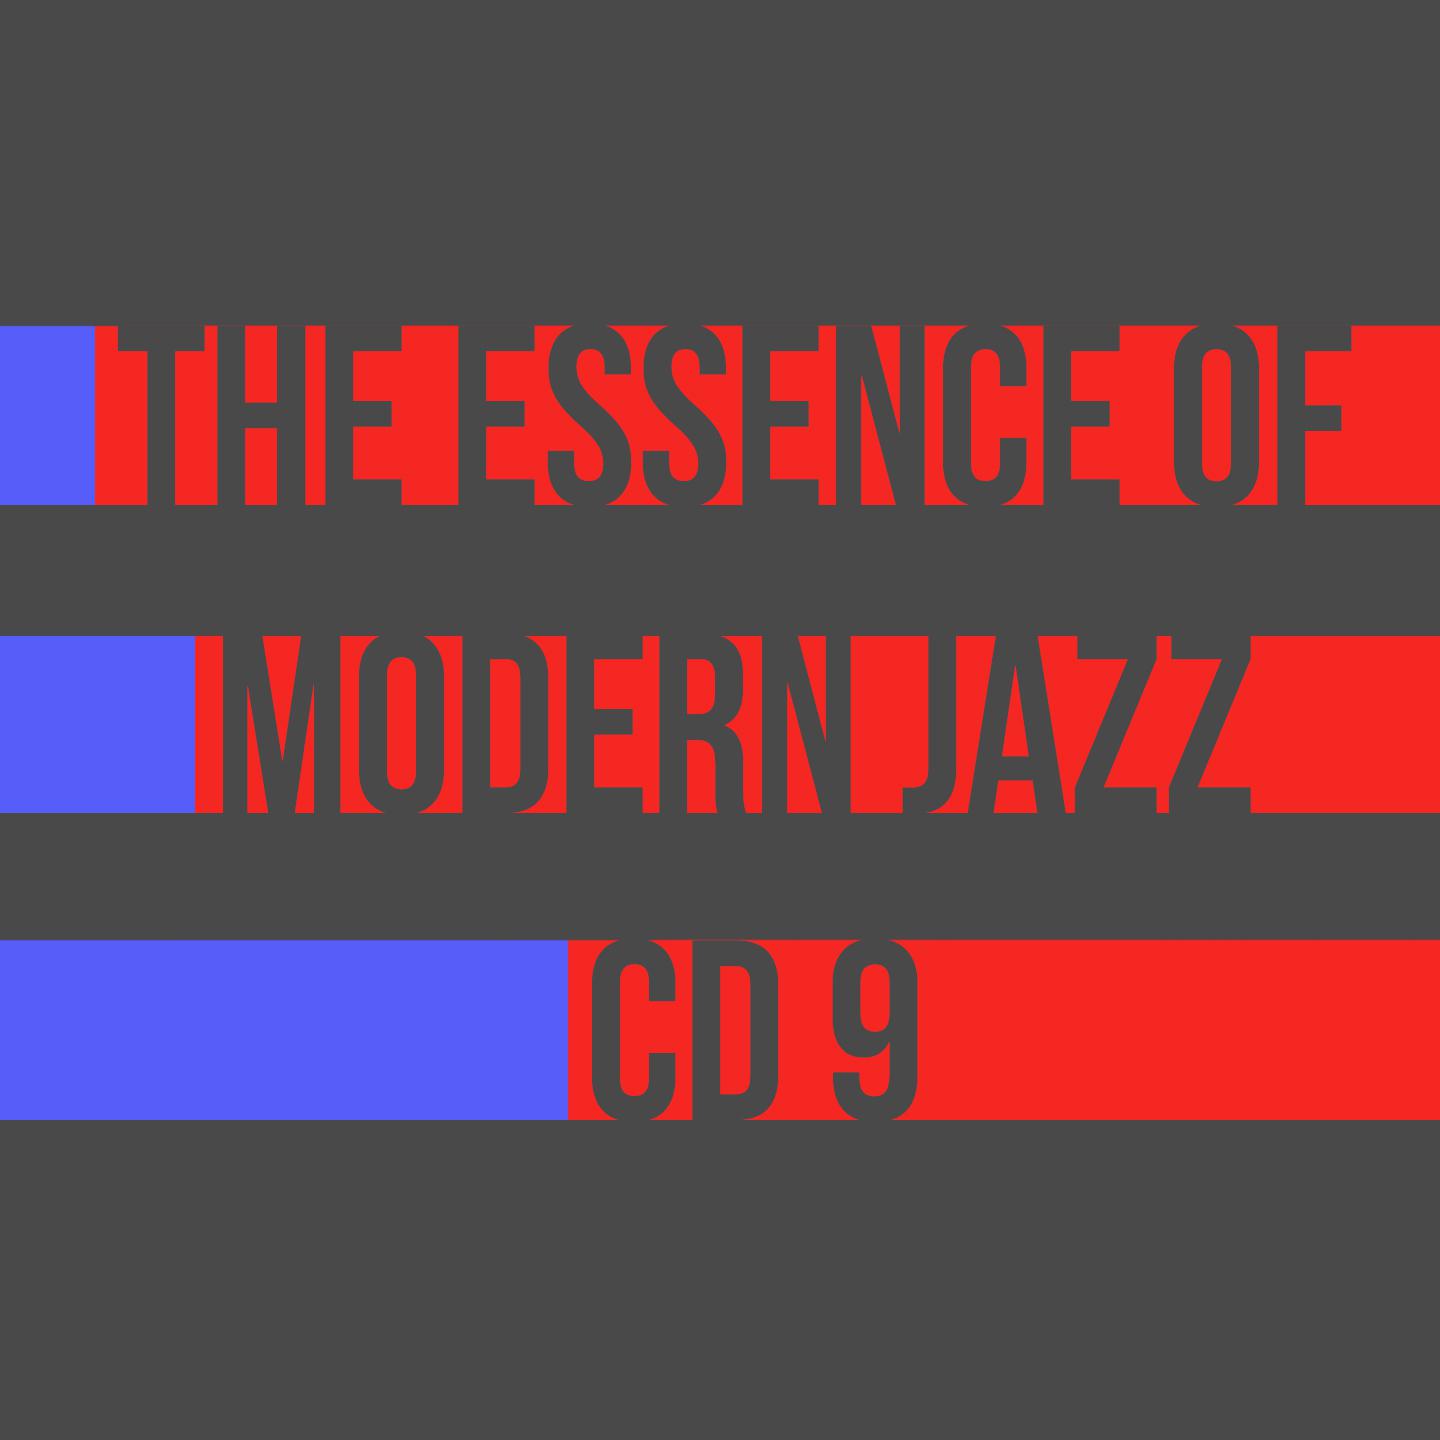 The Essence Of Modern Jazz CD 9